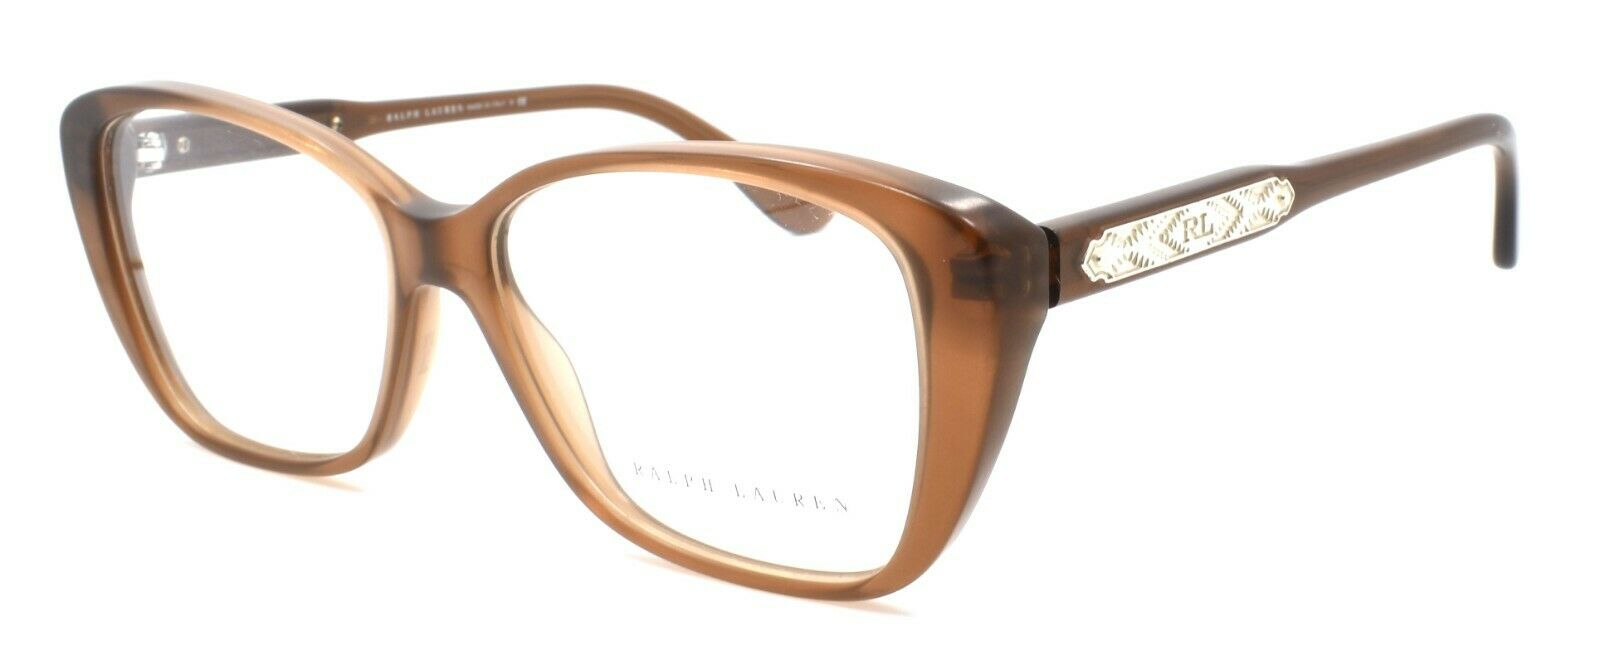 1-Ralph Lauren RL6116 5477 Women's Eyeglasses Frames 52-14-140 Brown Cognac-Does not apply-IKSpecs